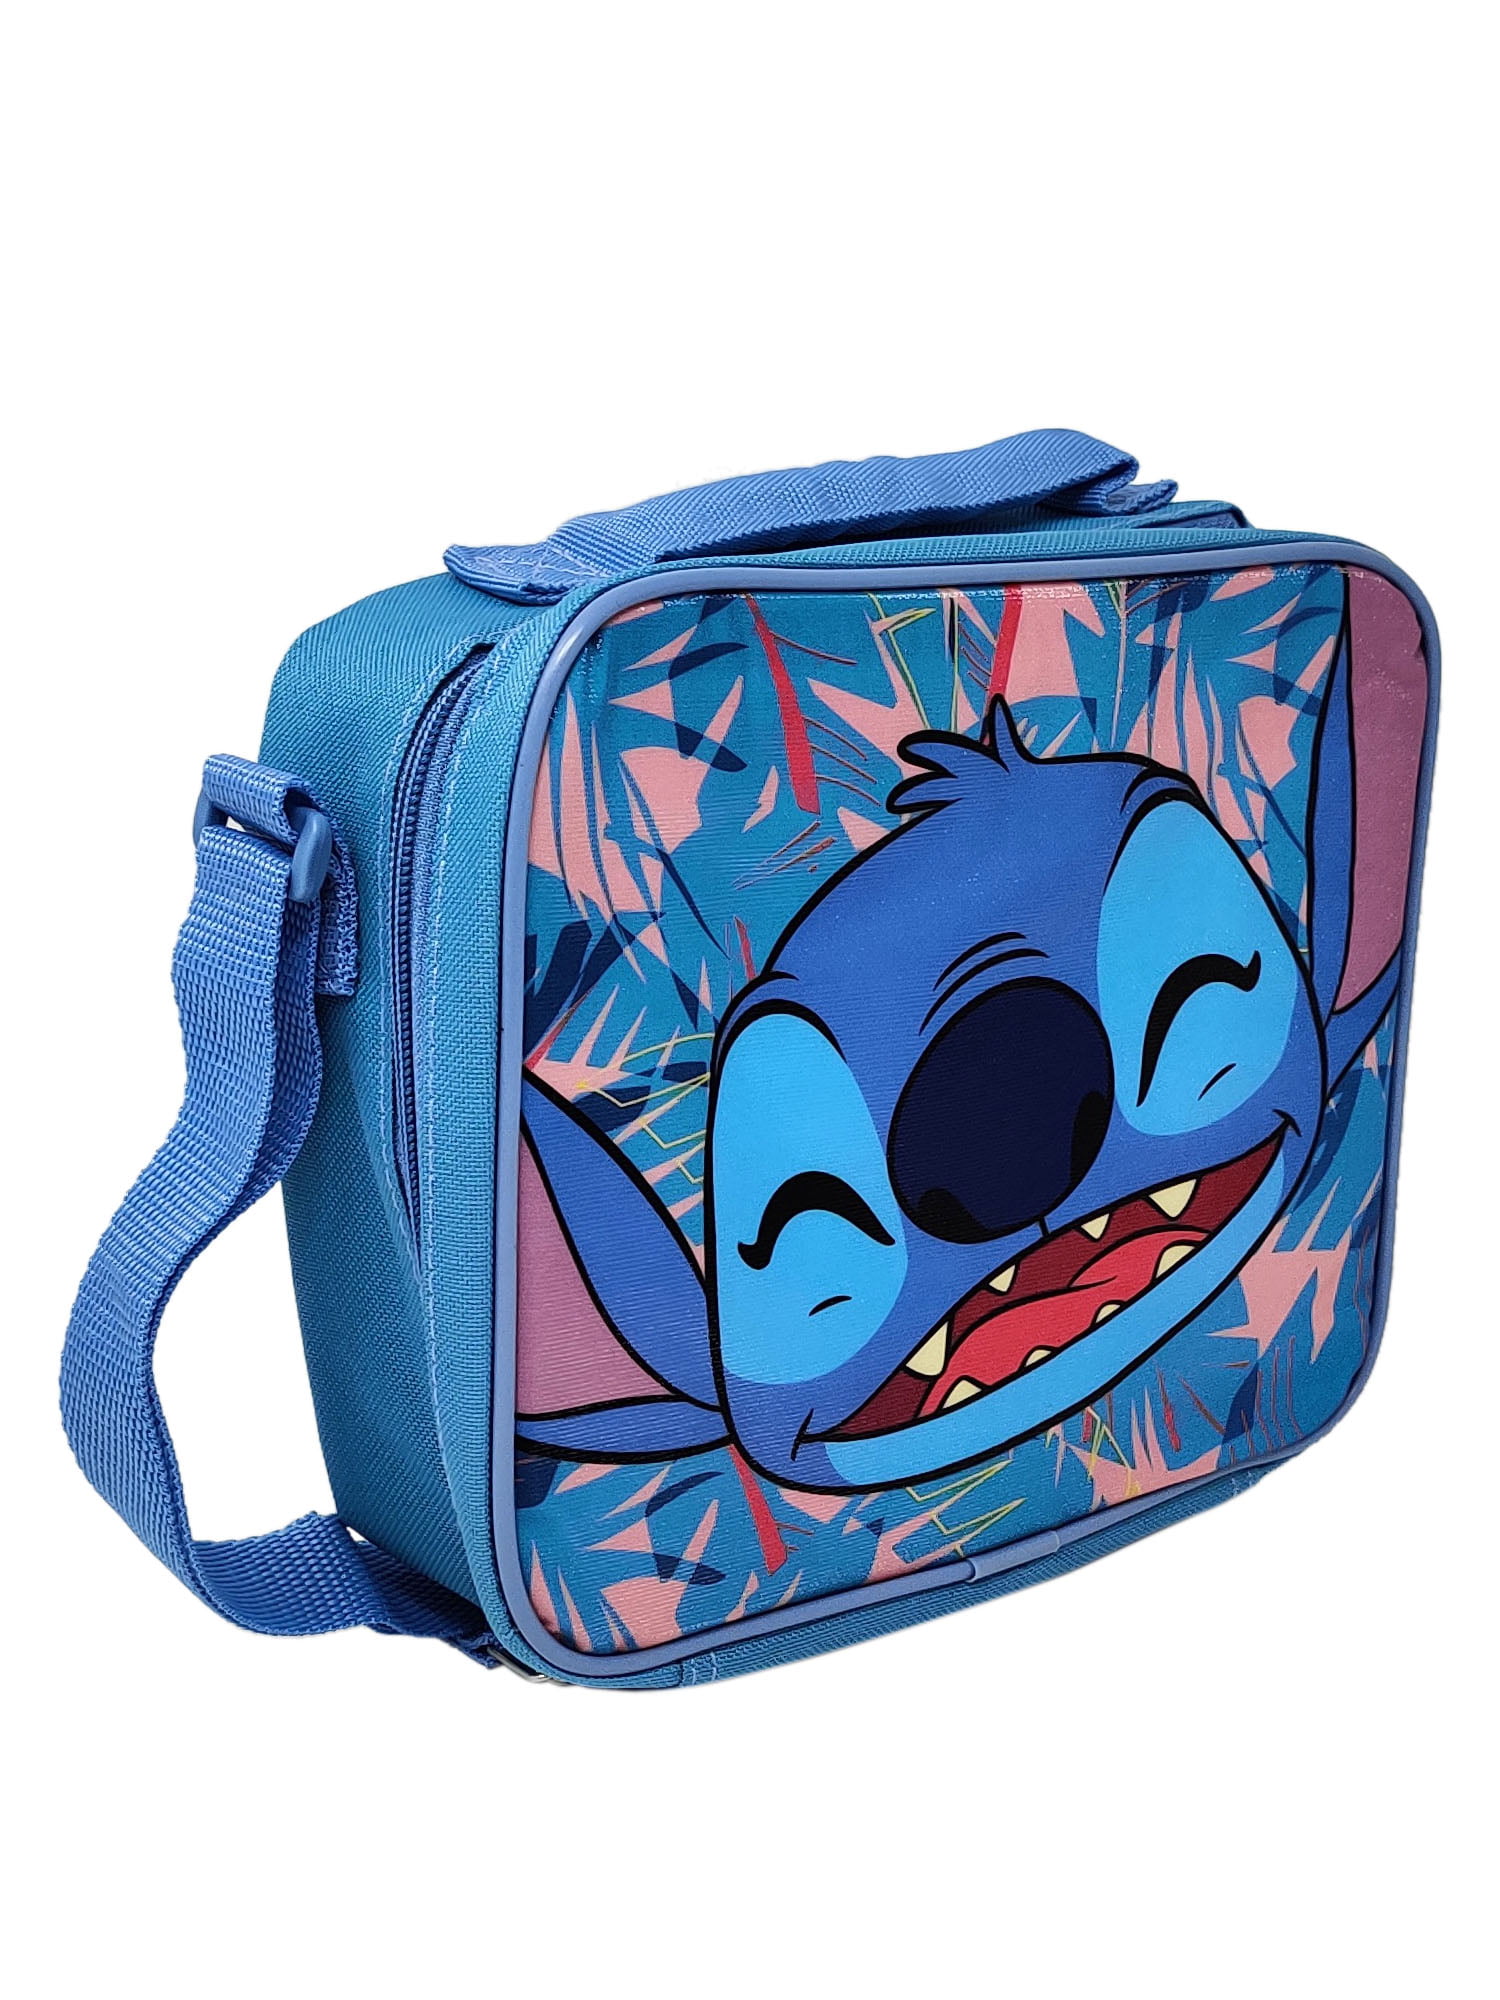 Polar Gear Lilo & Stitch Cooler Lunch Bag, Blue/Multi